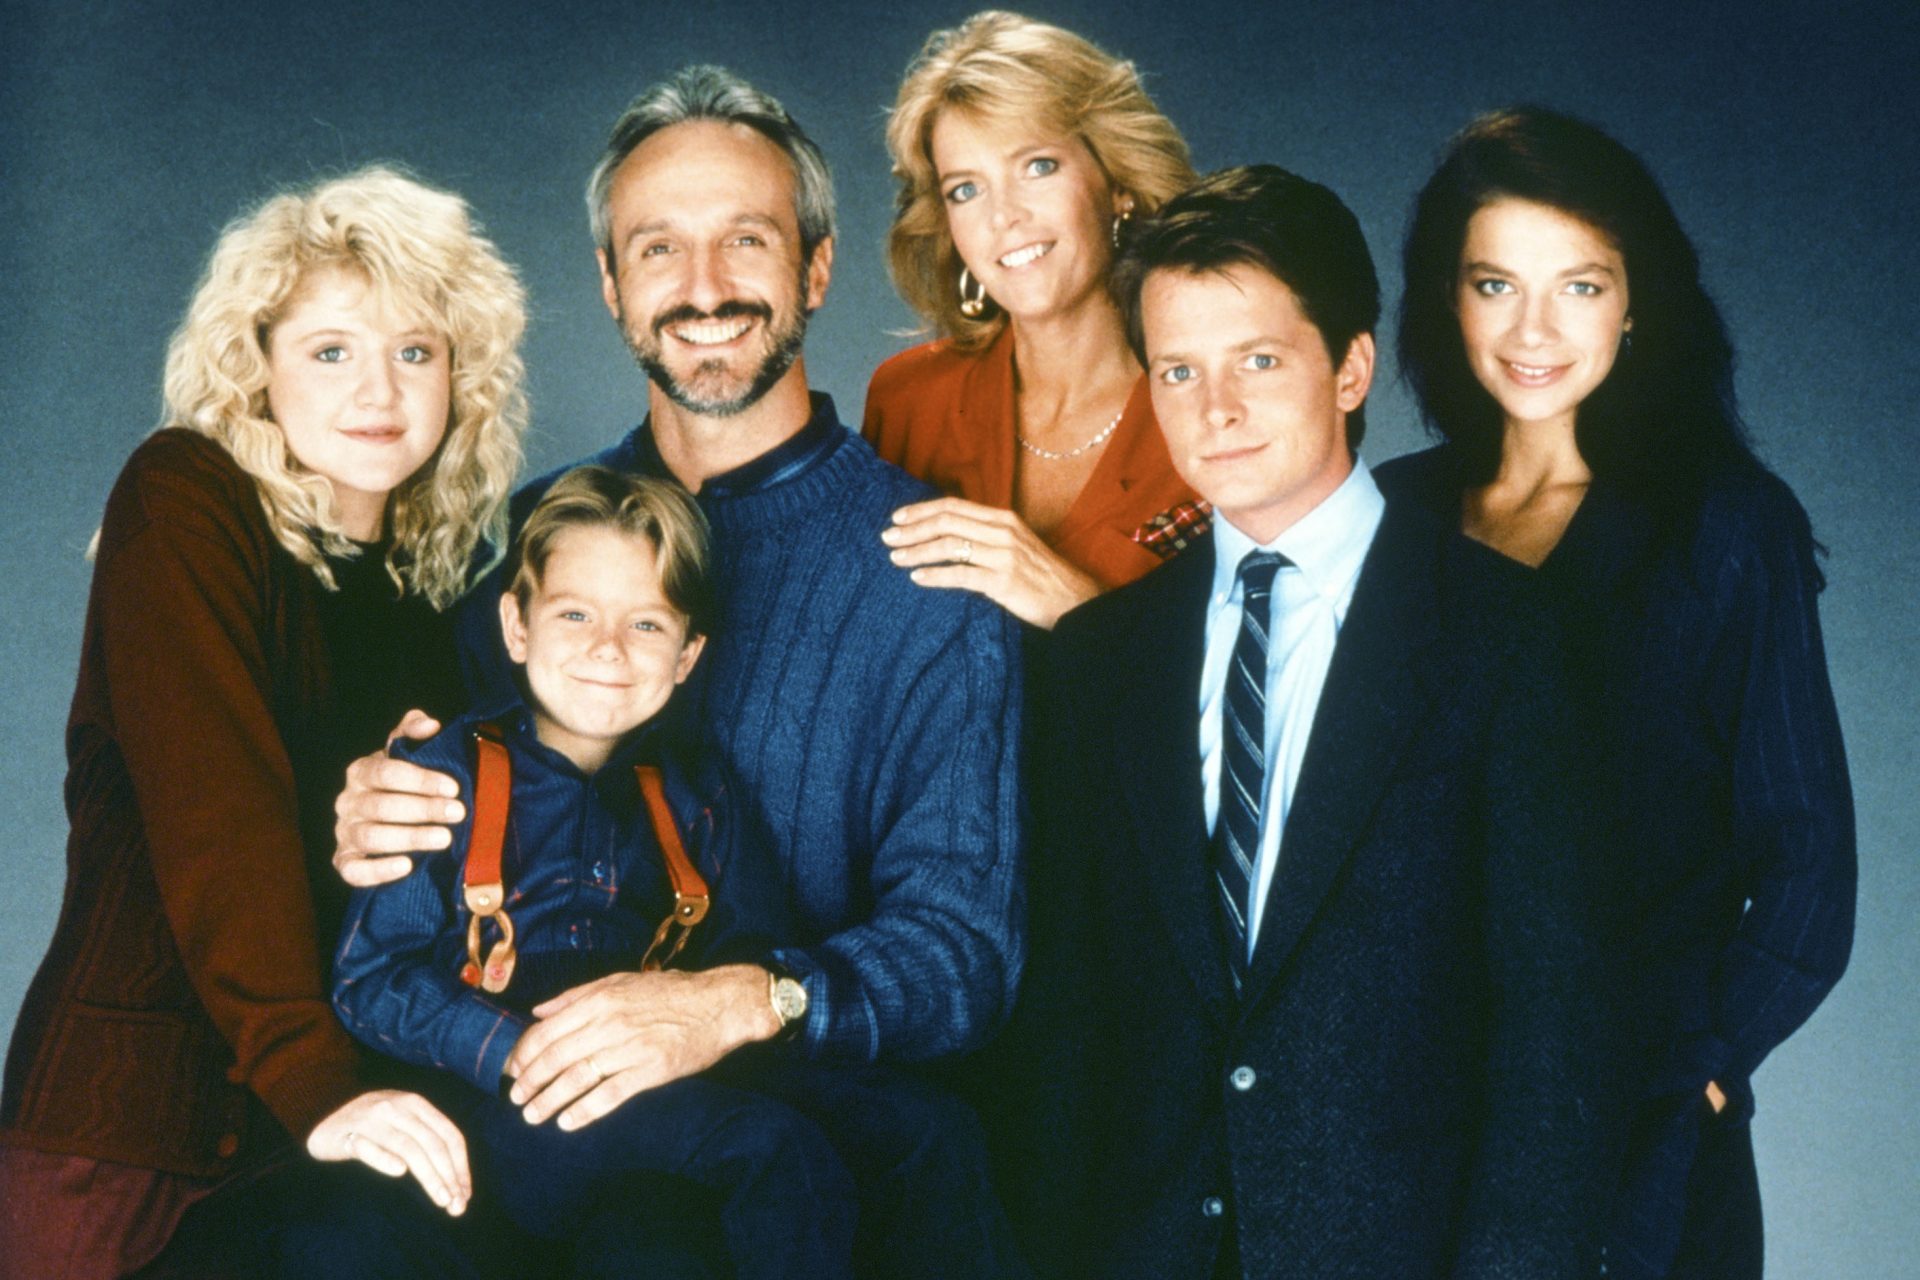 The popular sitcom ran for 7 seasons